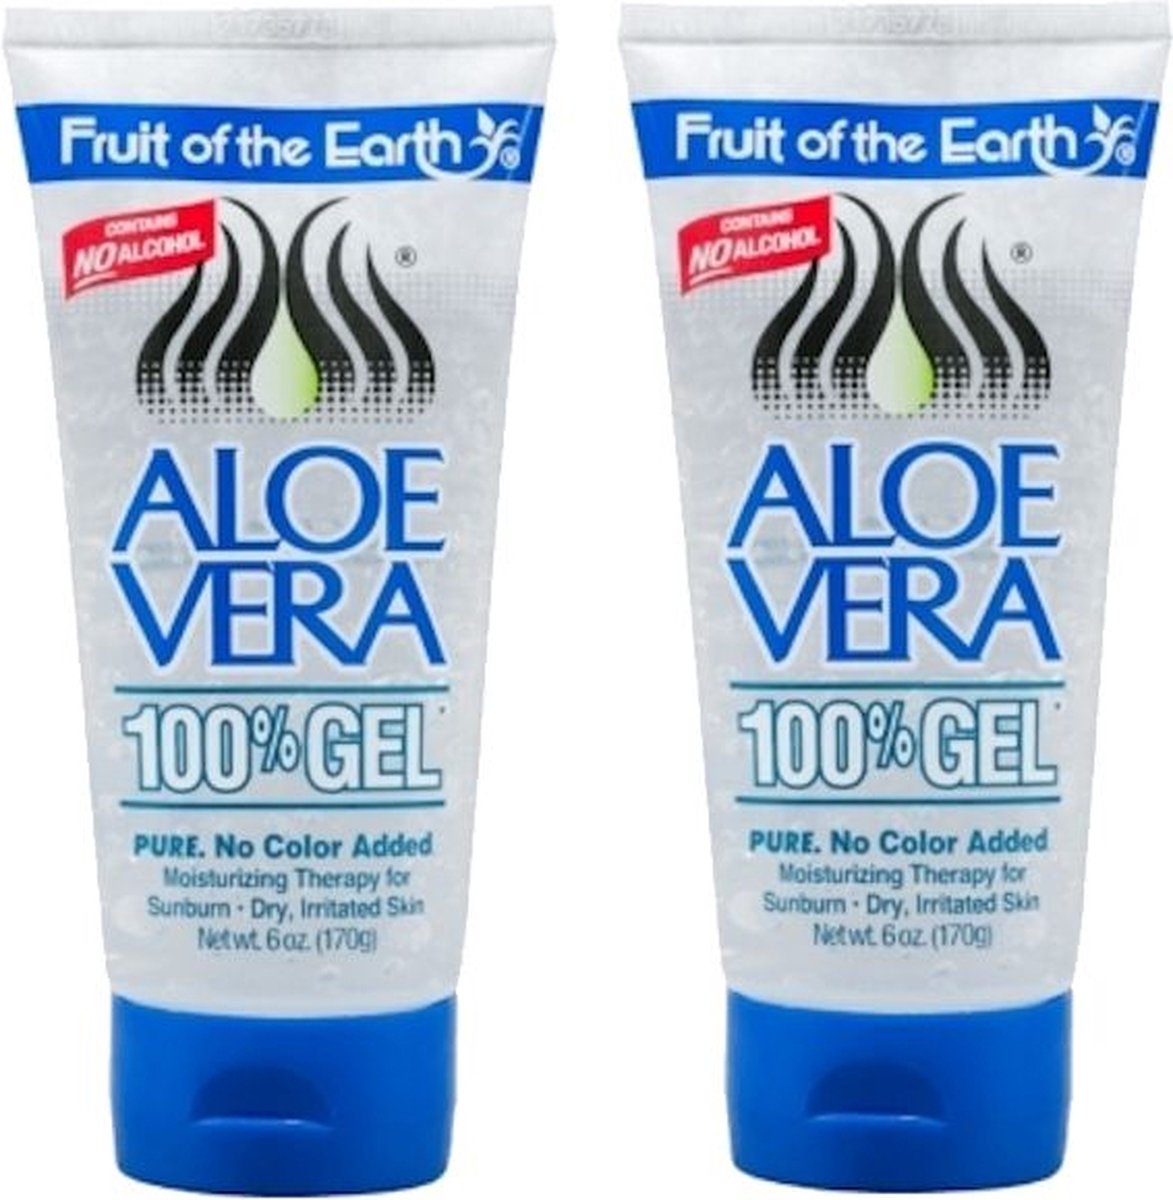 FRUIT OF THE EARTH - Aloe Vera 100% Gel - 2 Pak